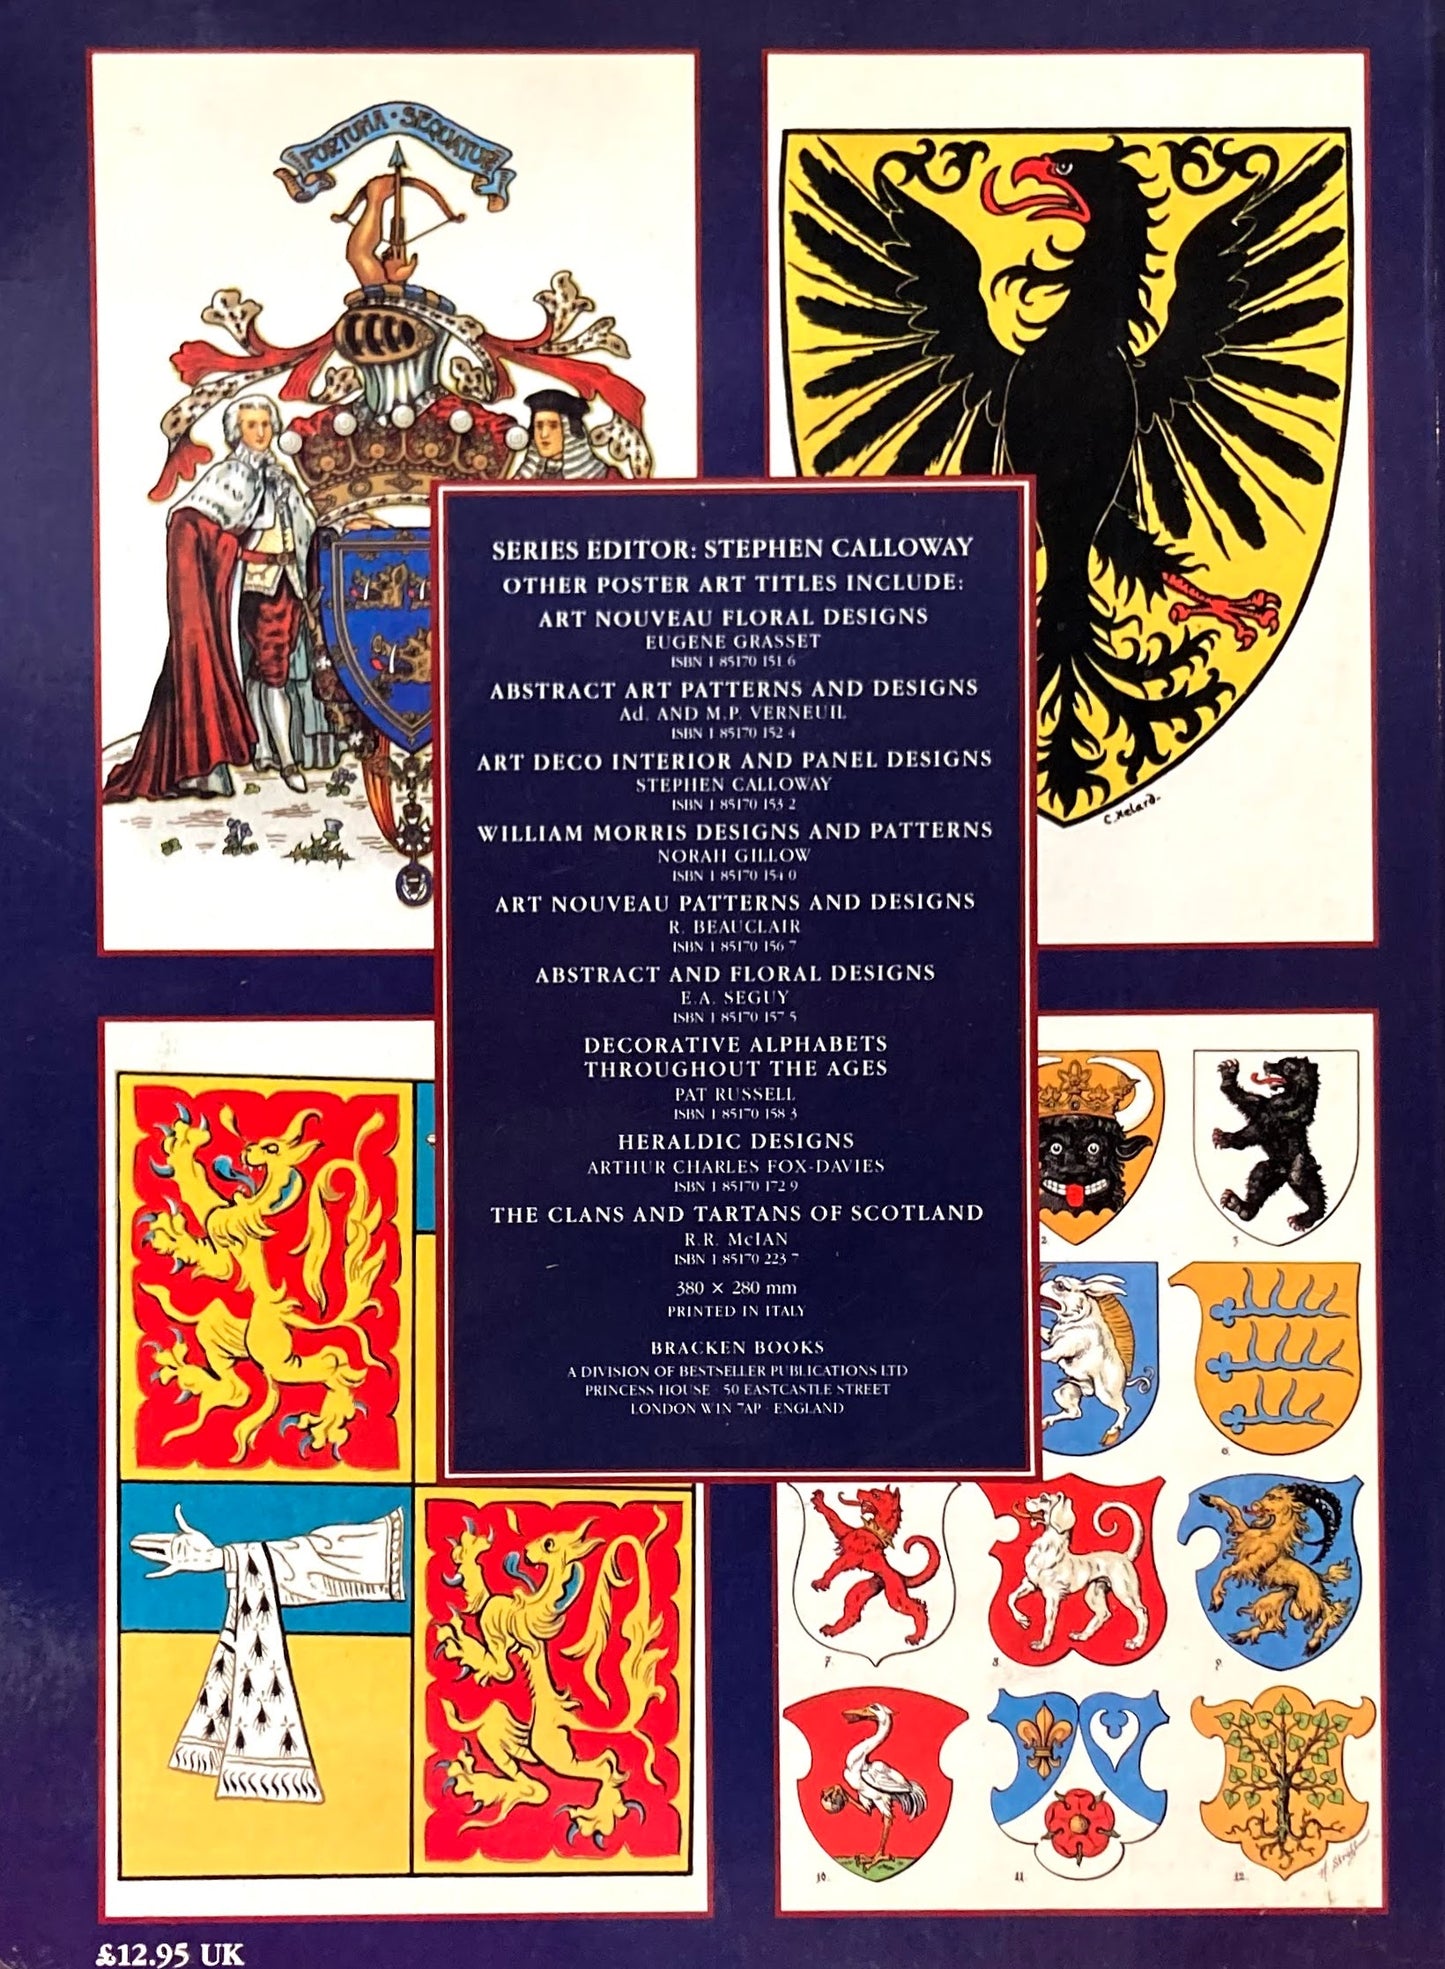 Heraldic Designs　A. C. Fox-Davies